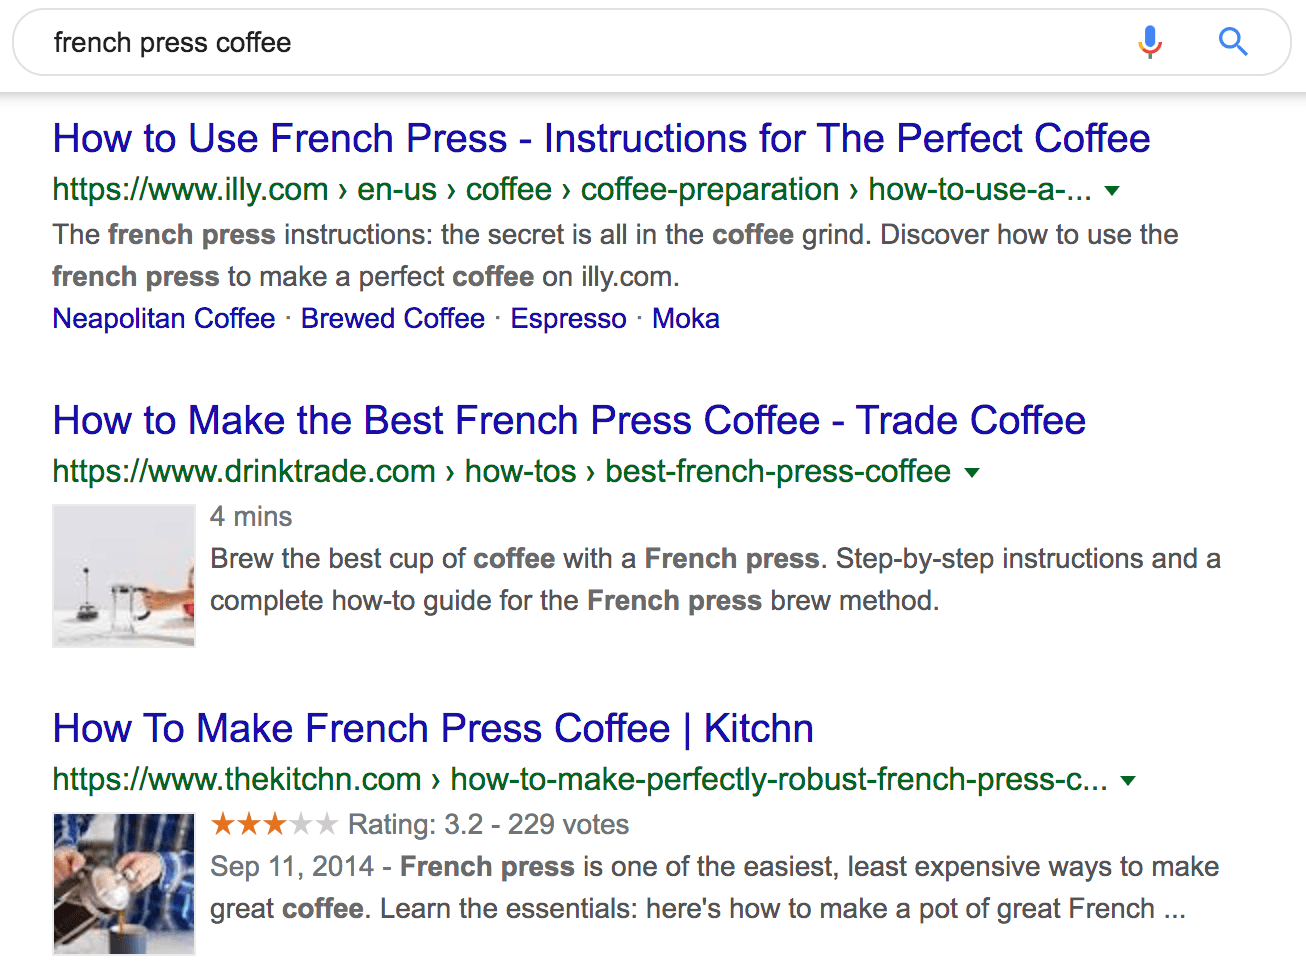 топрезультати за пошуком «french press coffee»